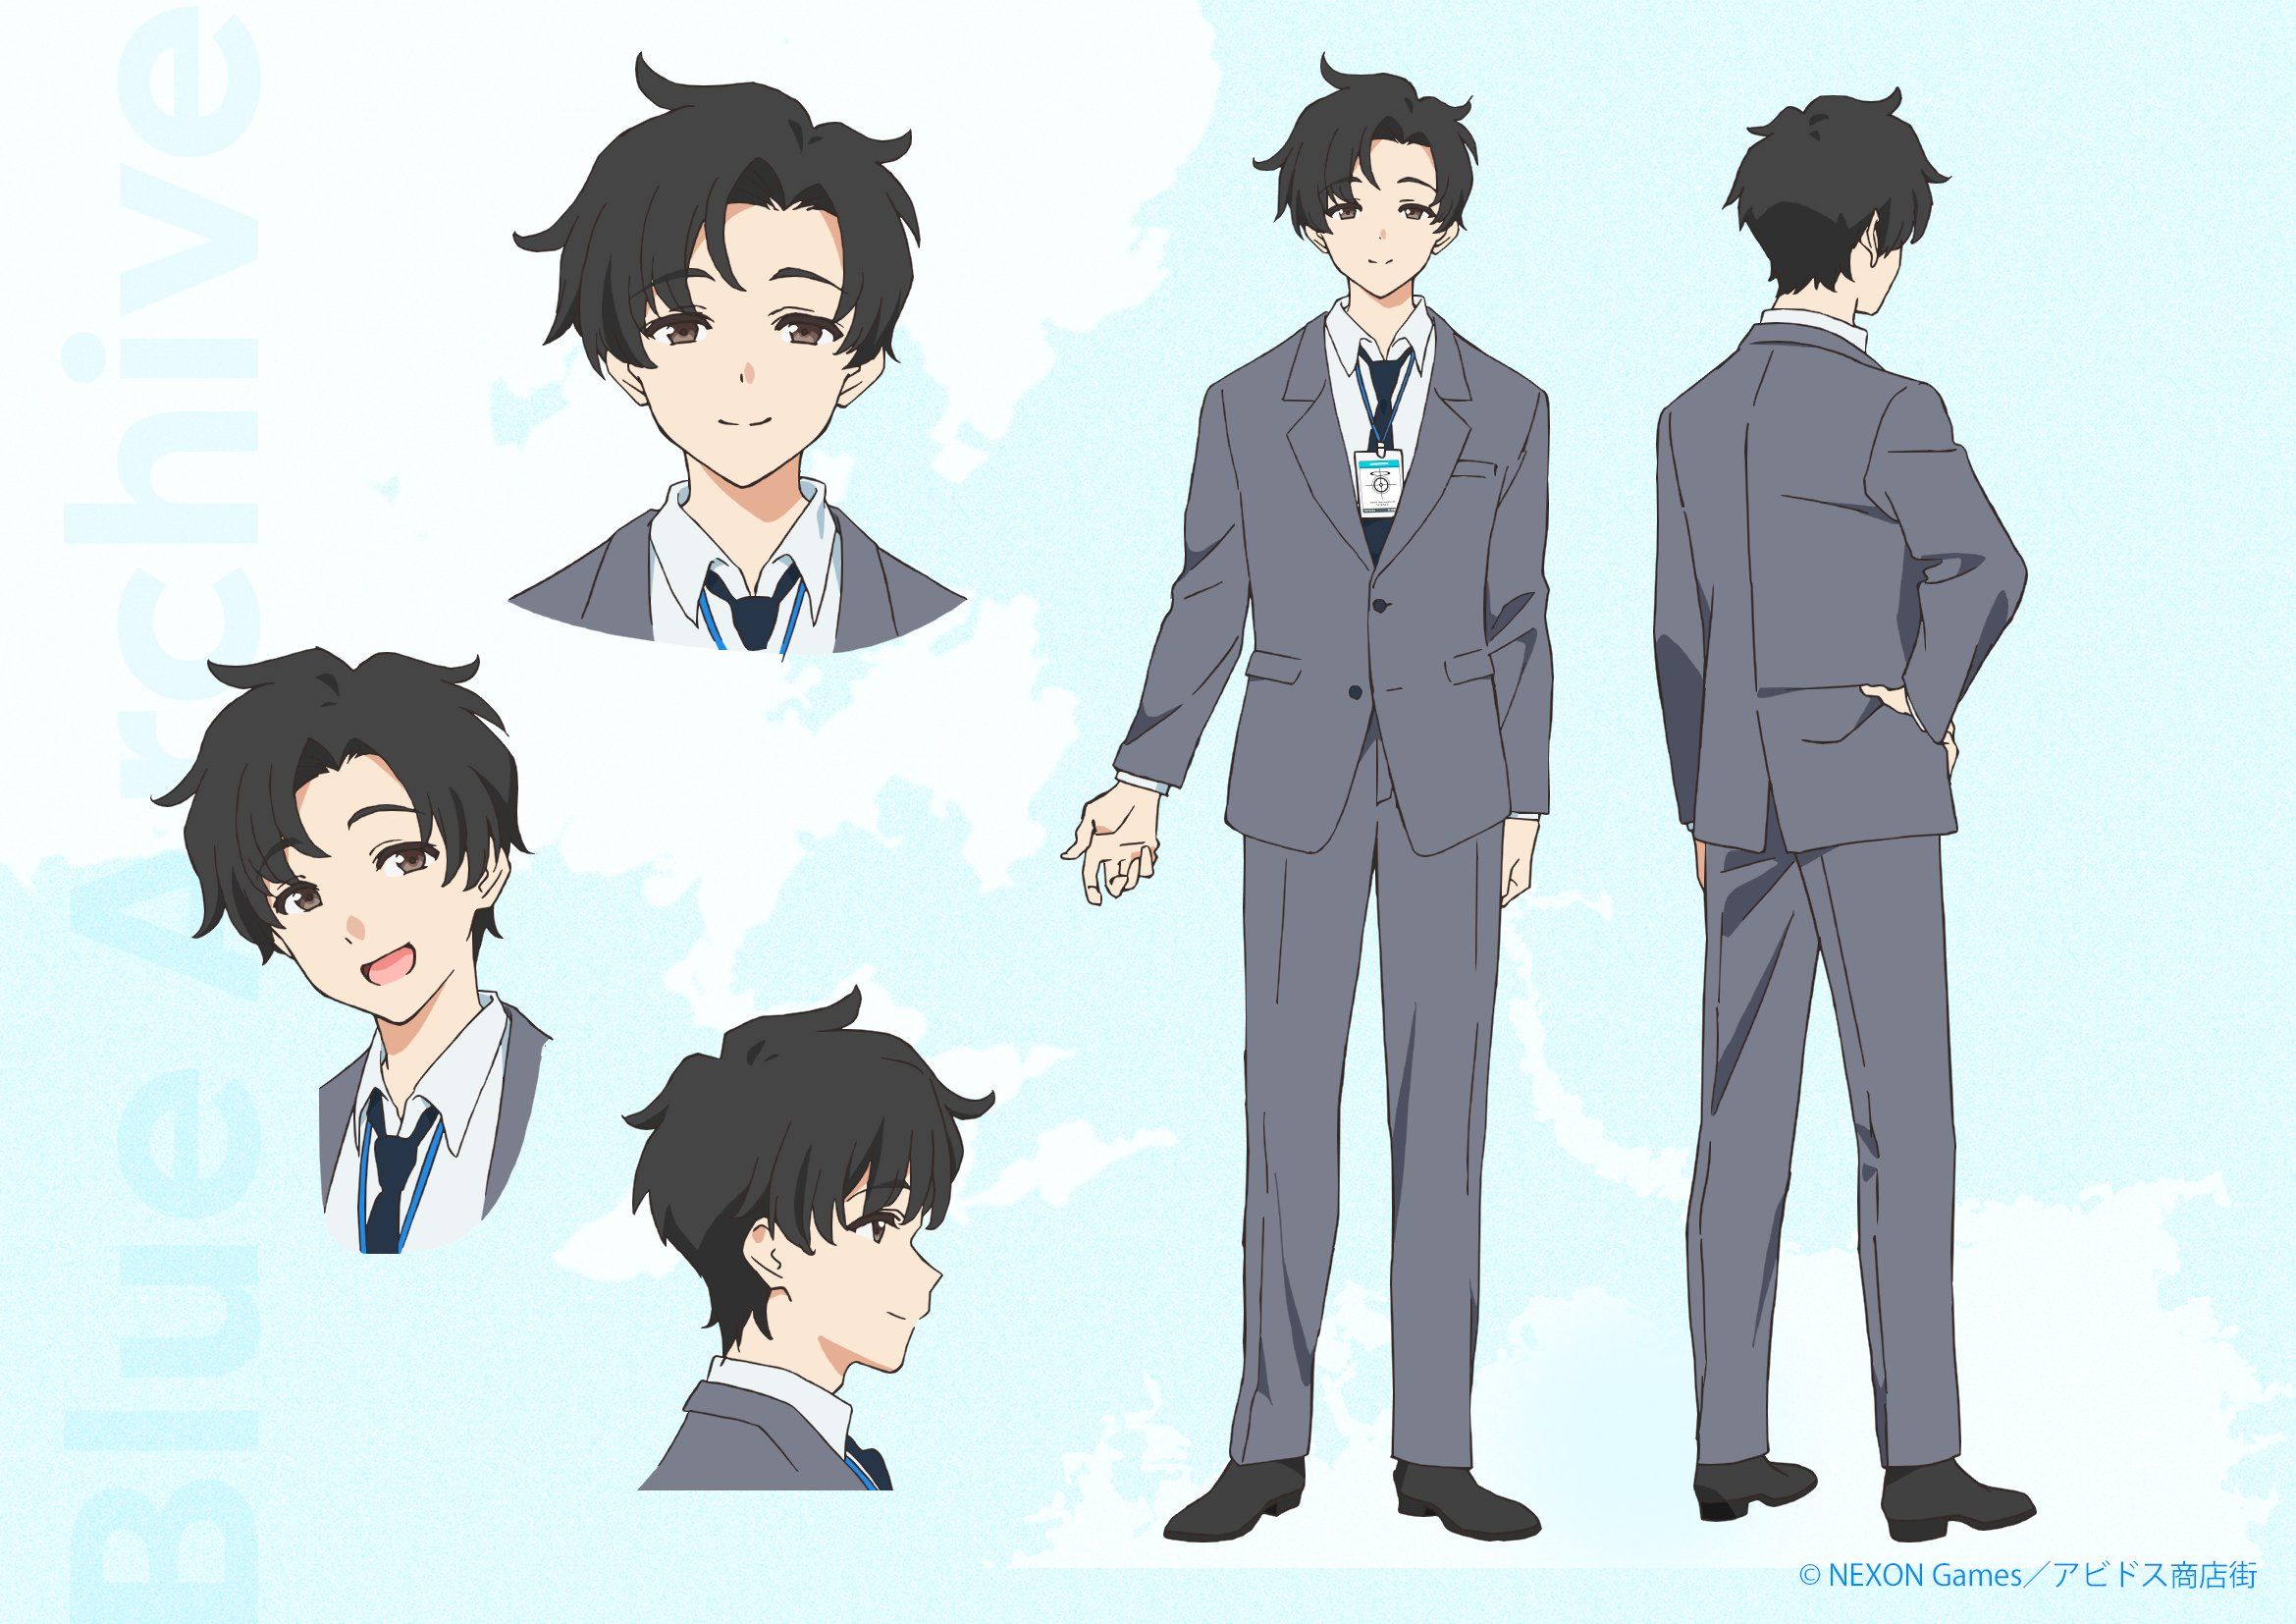 Desain karakter Sensei di anime Blue Archive.